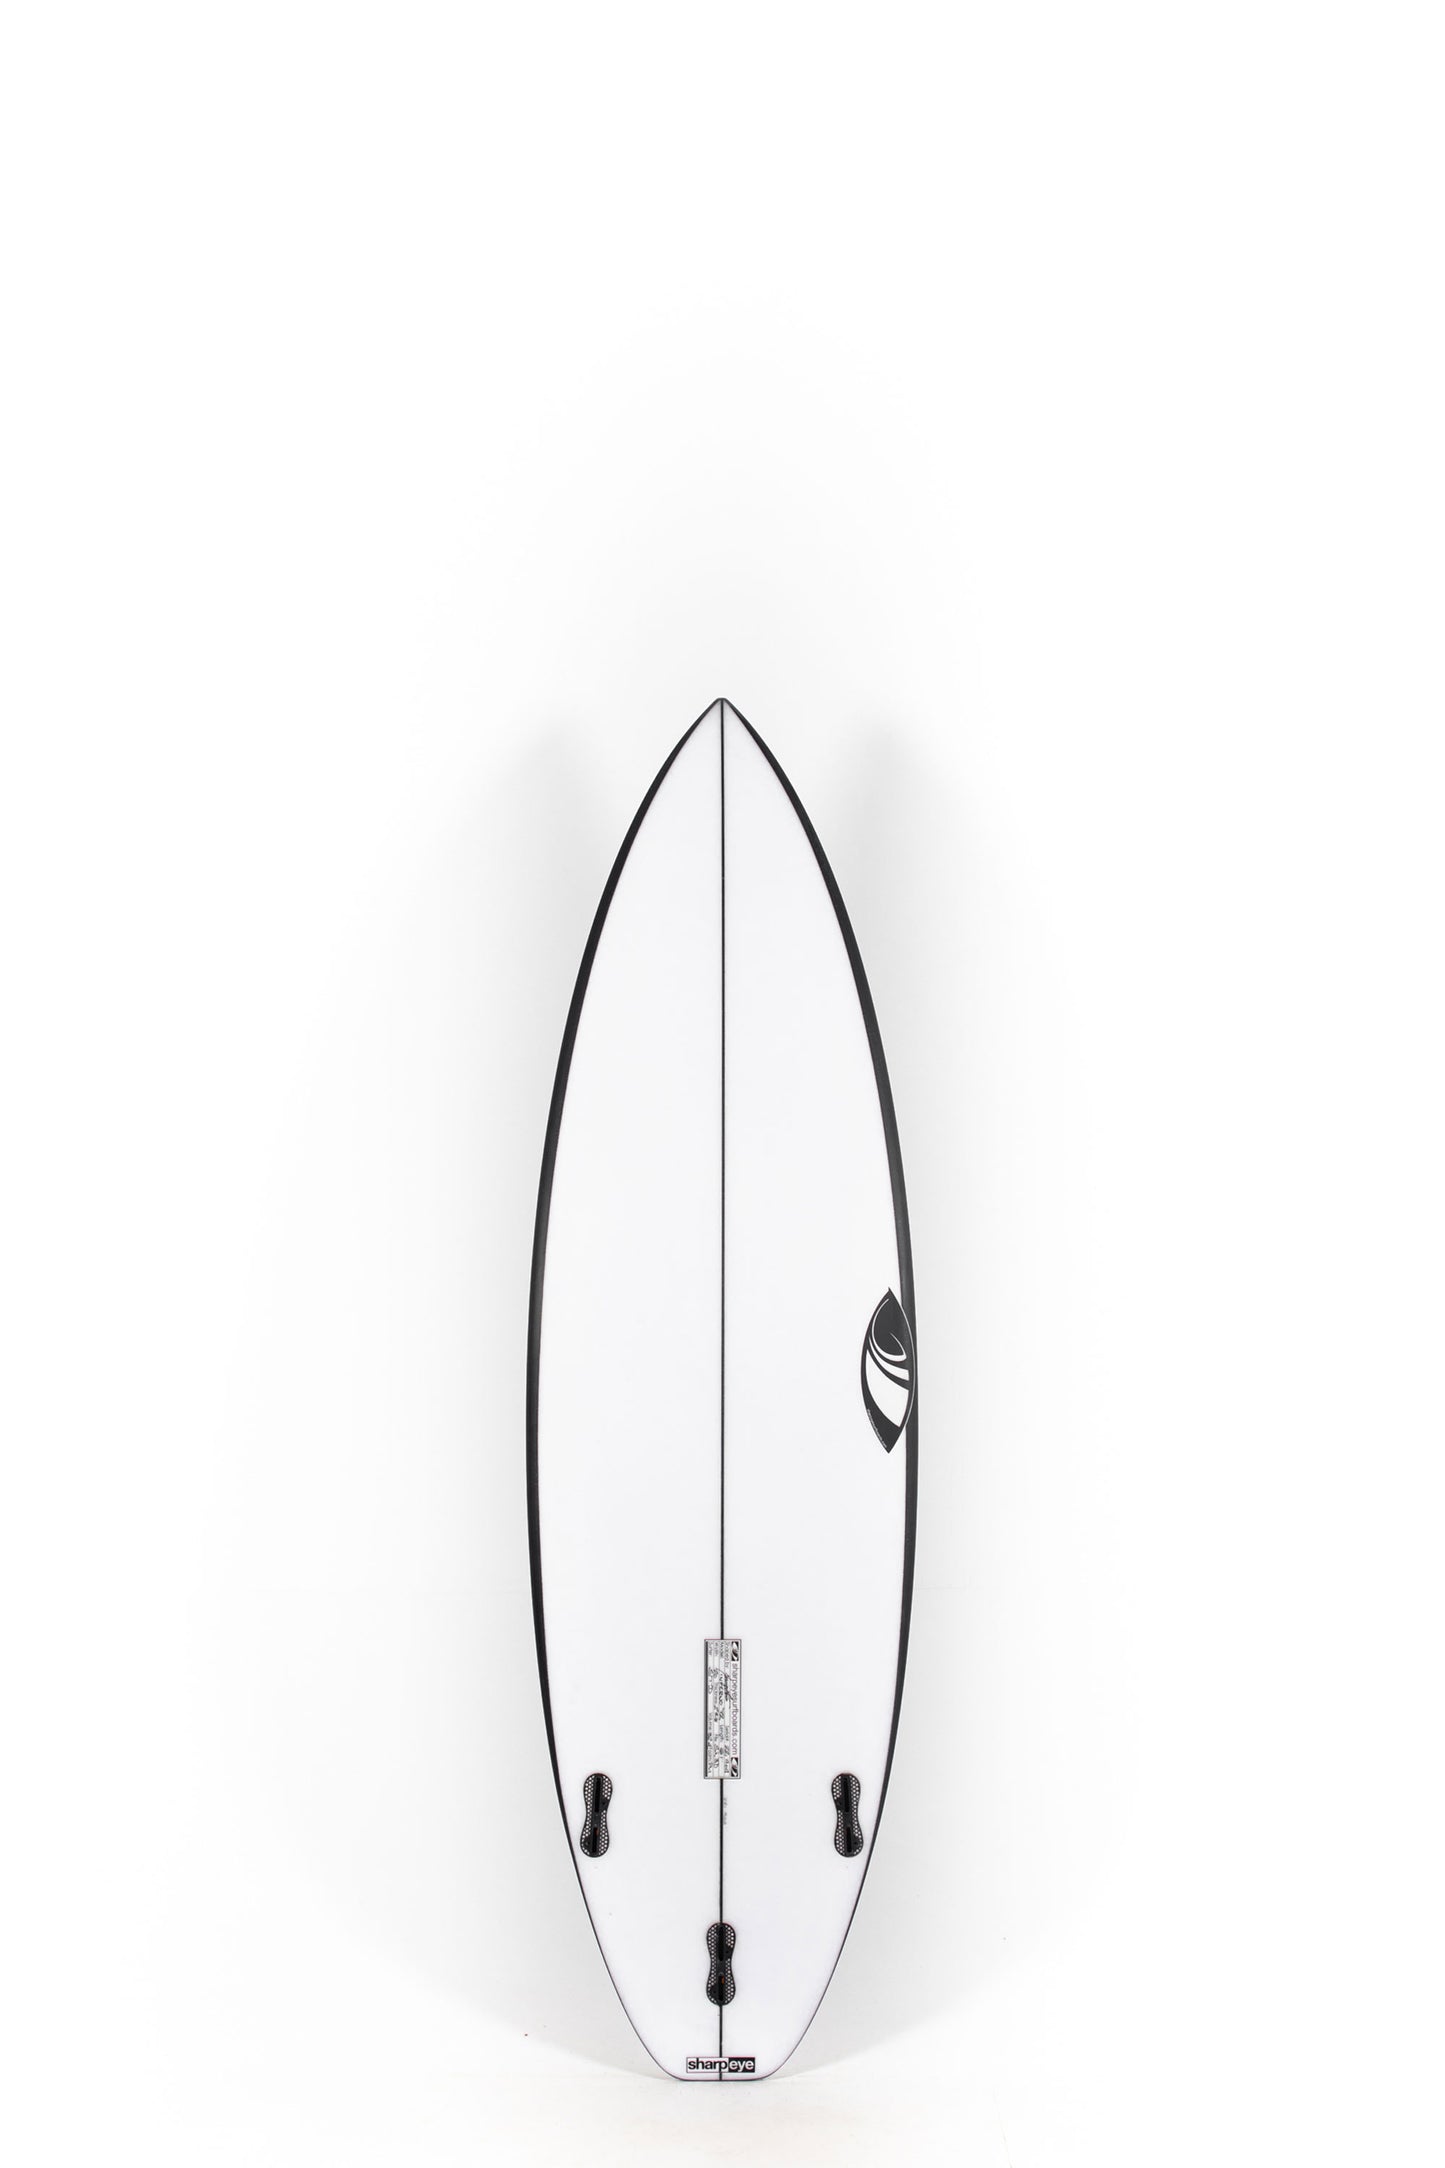 Pukas Surf Shop - Pukas Surf Shop - Pyzel Surfboards - PHANTOM - 6'2" x 20 3/8 x 2 11/16 - 35,9L. - Ref: 679319